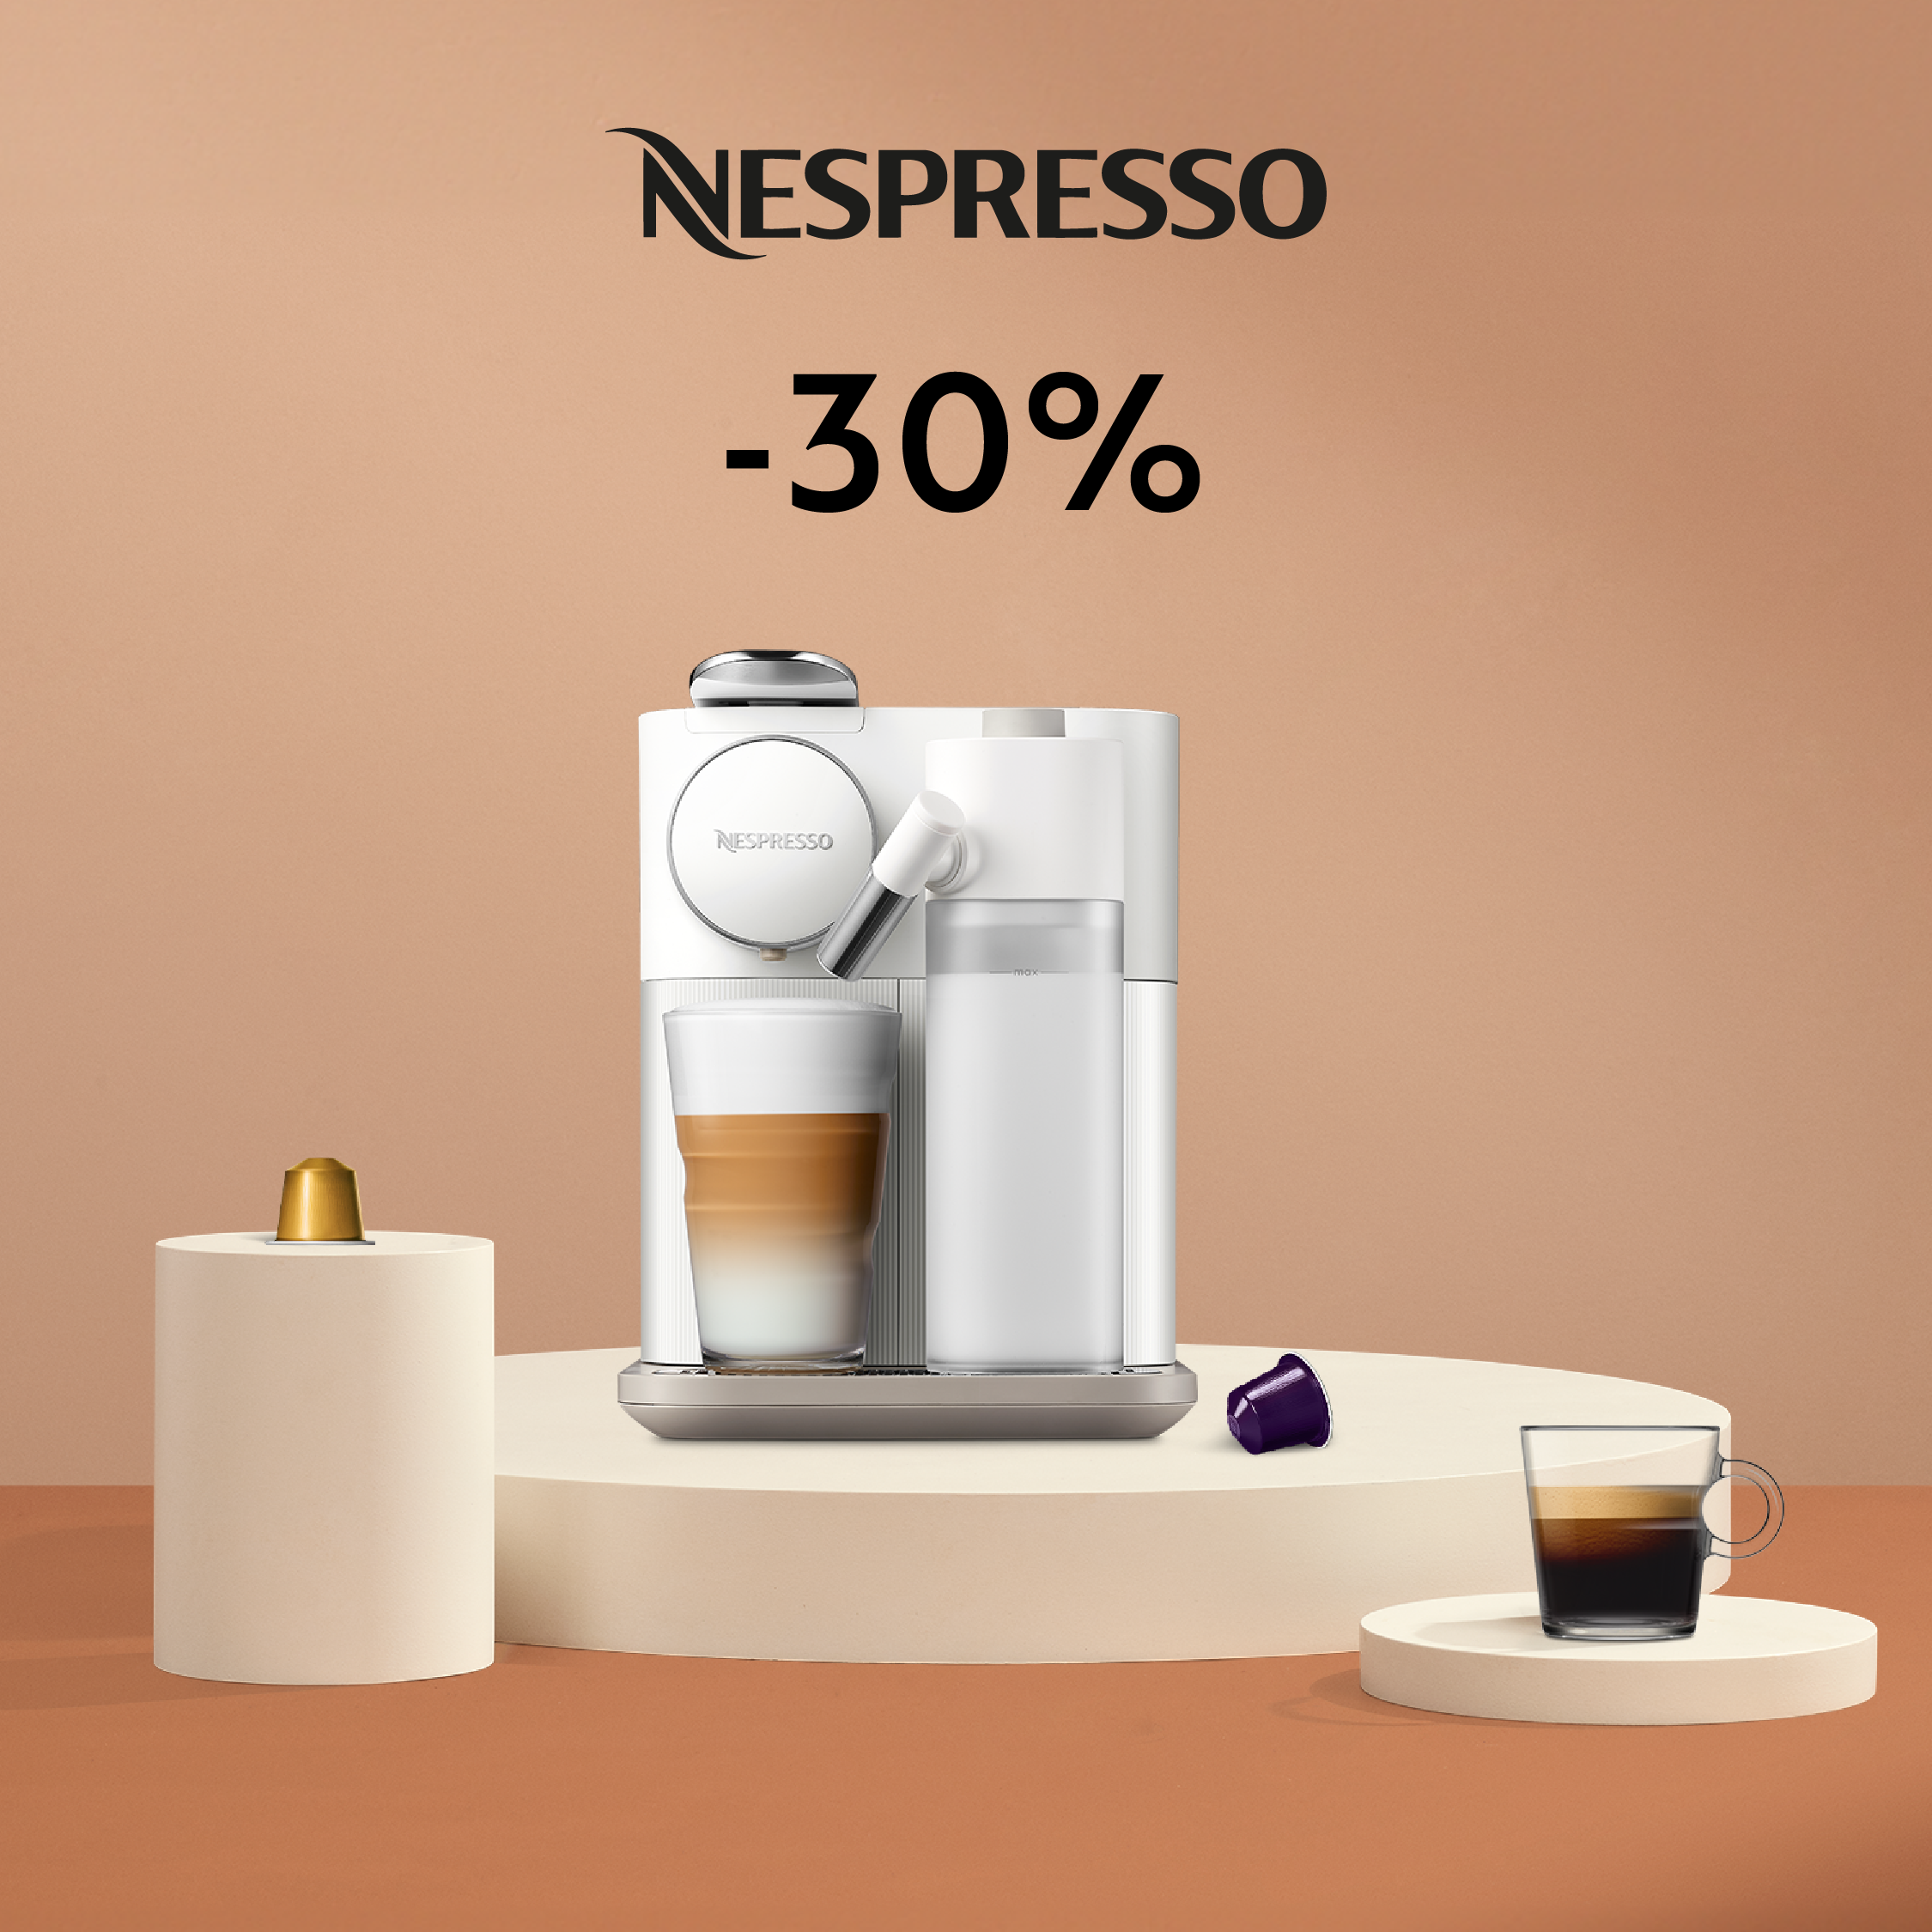 30% DISCOUNT ON THE LATTISSIMA GRAN COFFEE MACHINE WHEN YOU BUY 250 CAPSULES!